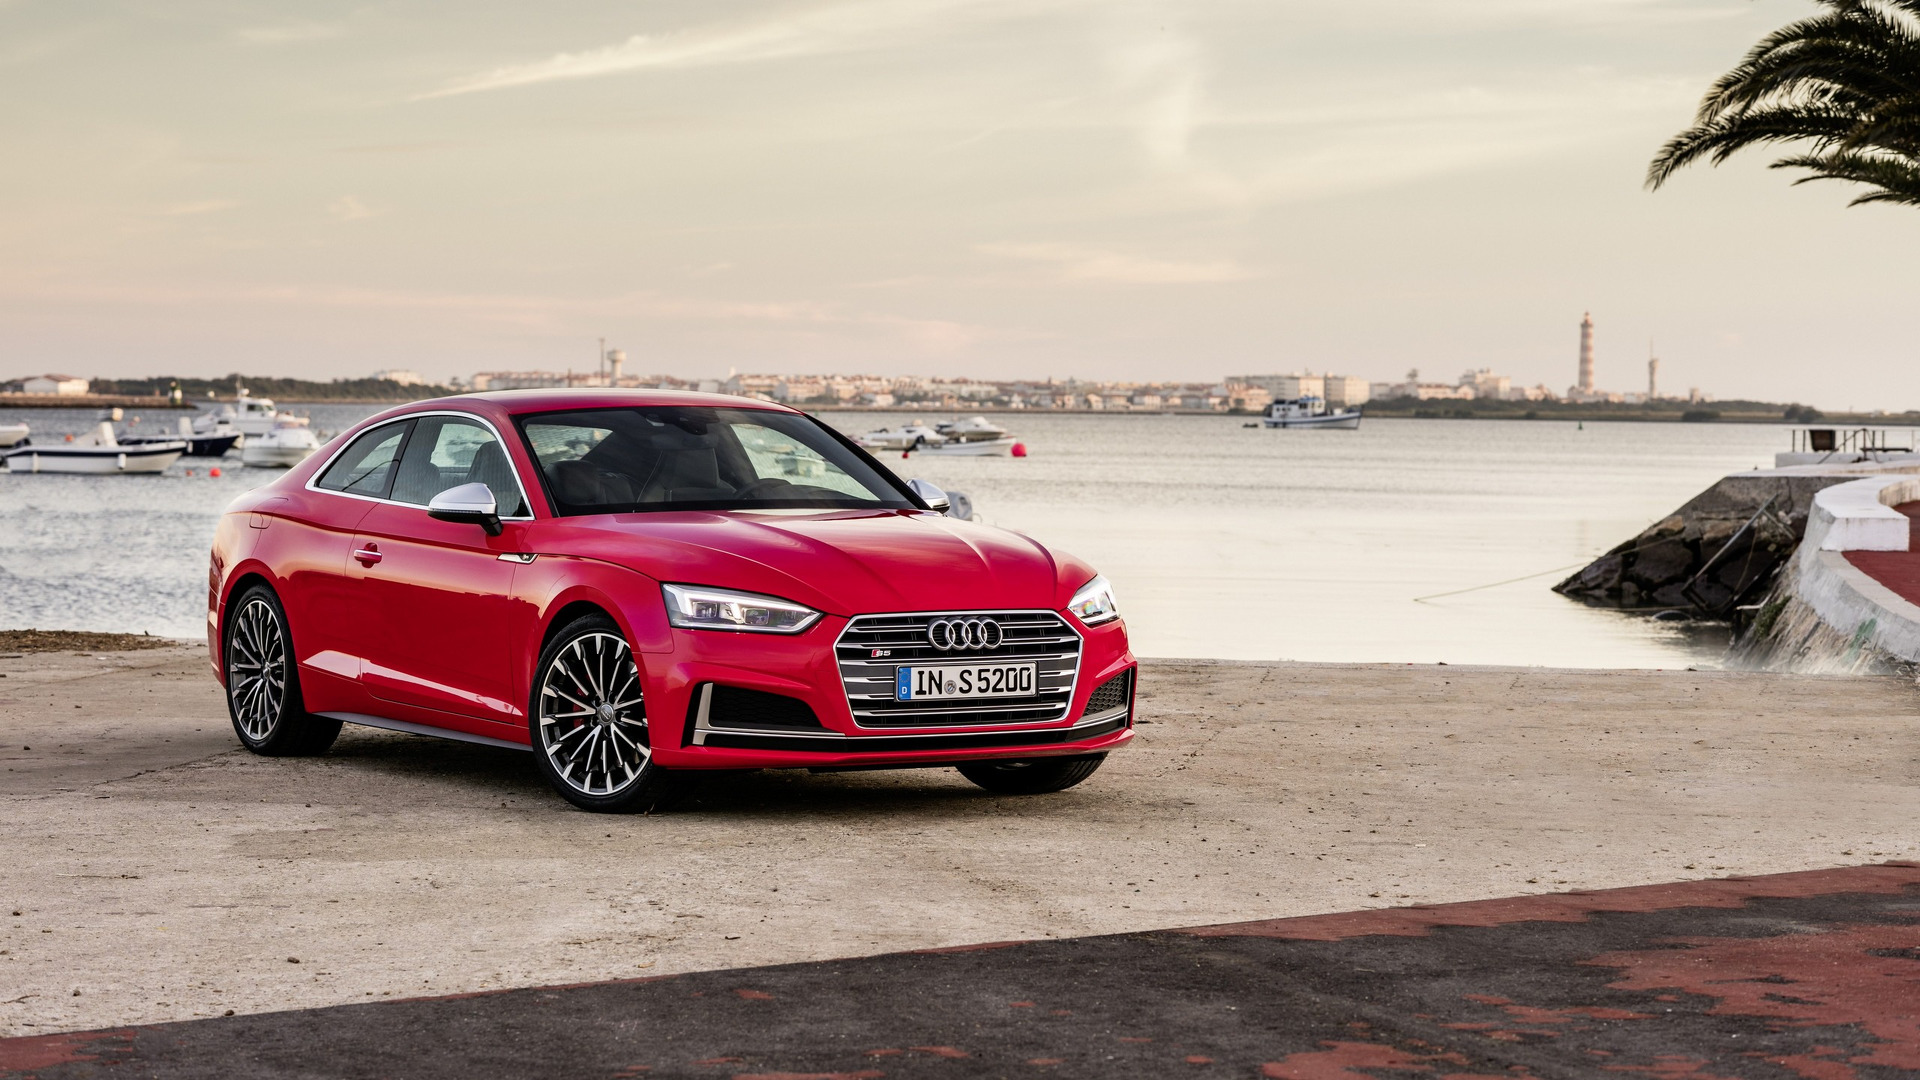 Audi A5 Coupe Rental Price In Dubai